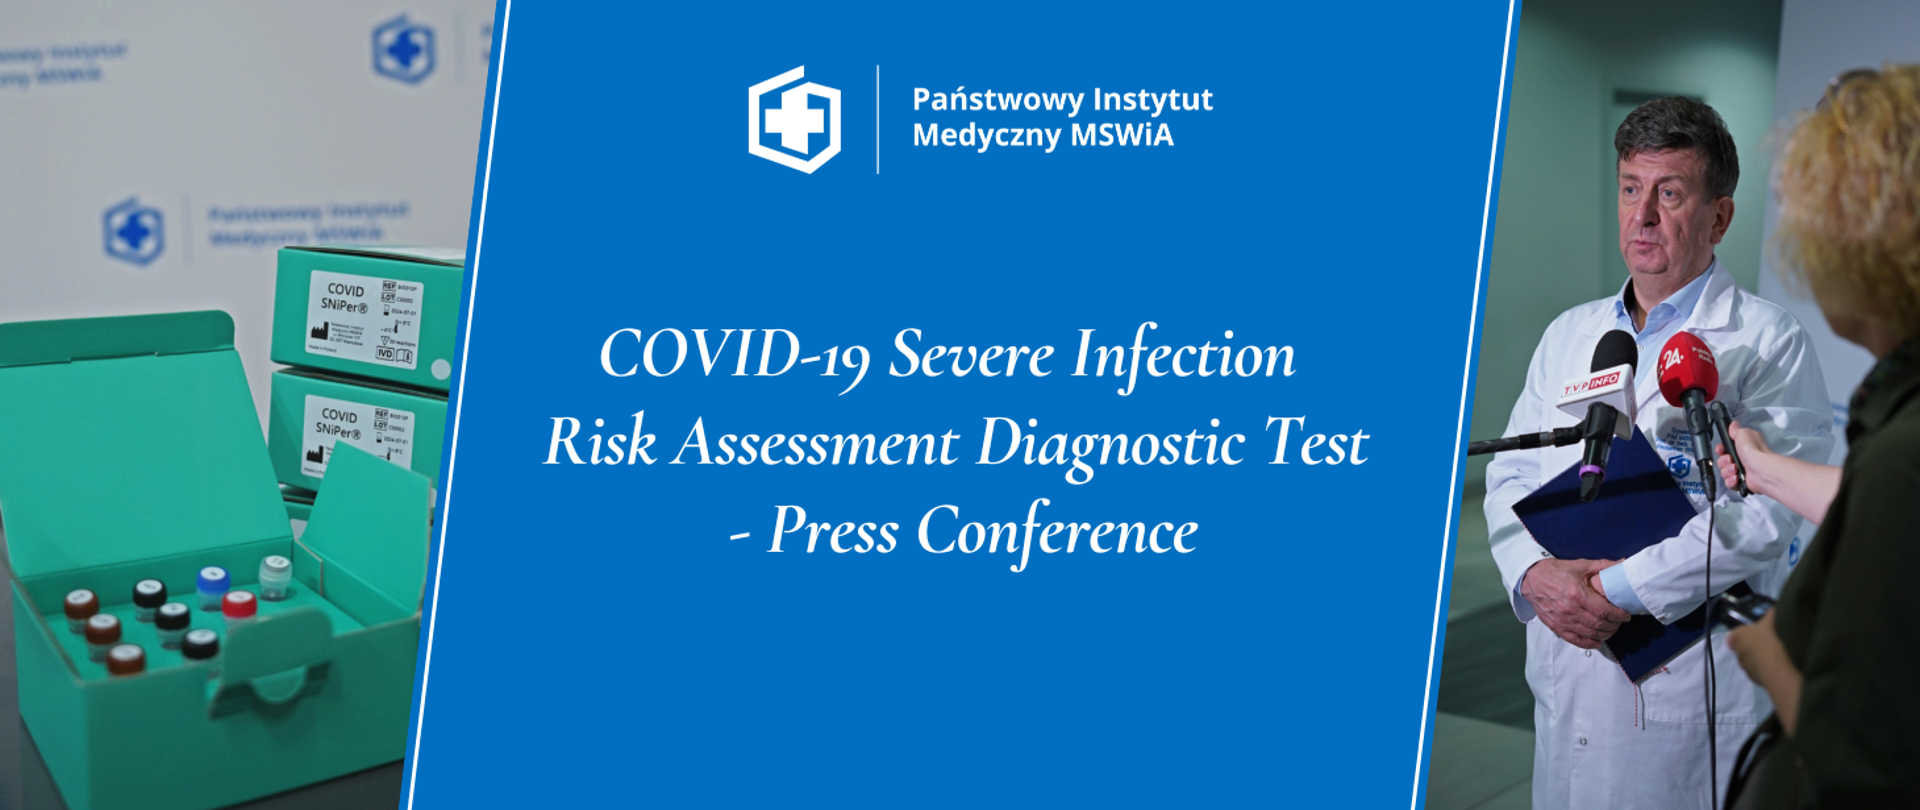 COVID-19 Severe Infection Risk Assessment Diagnostic Test - Press Conference